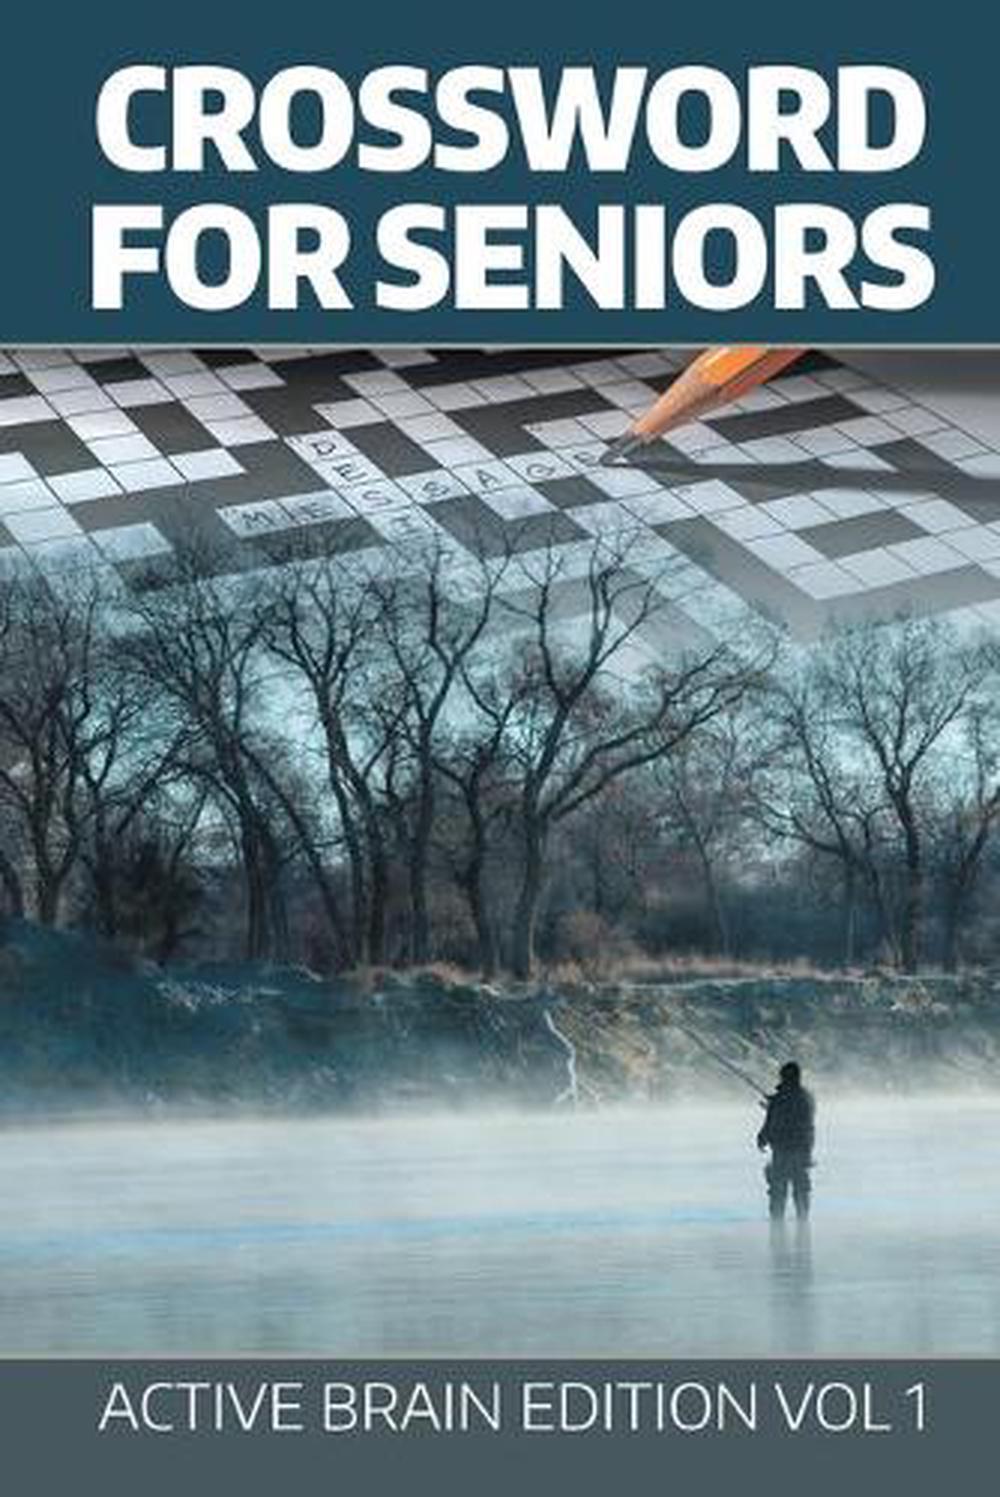 Crossword for Seniors by Speedy Publishing Llc (English) Paperback Book